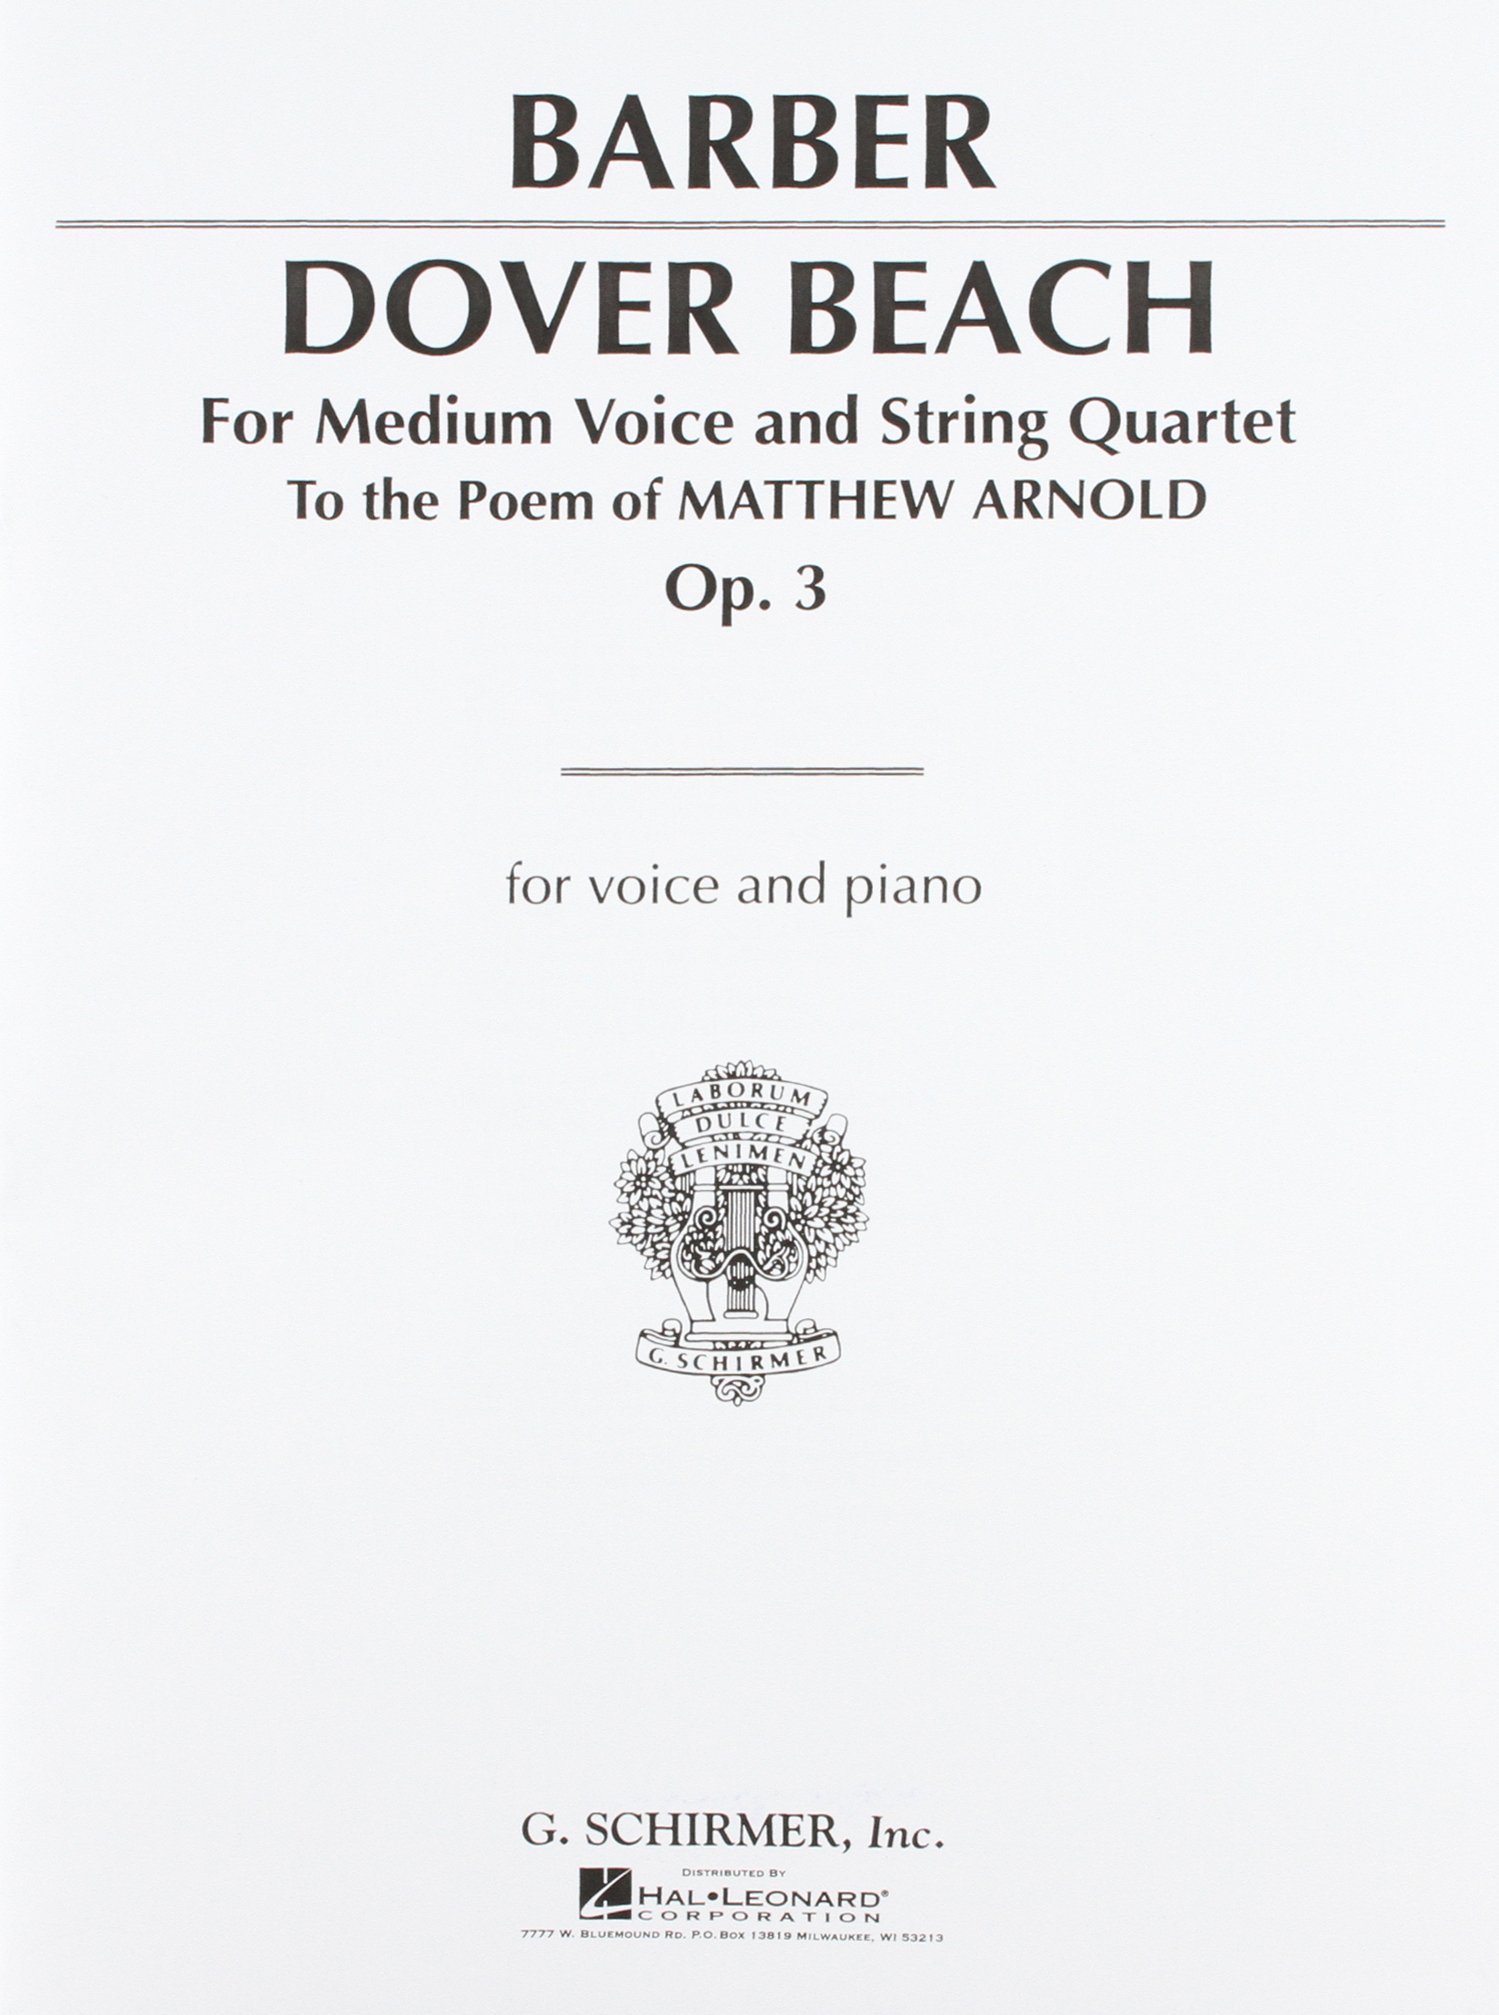 Samuel barber dover beach pdf reader pdf